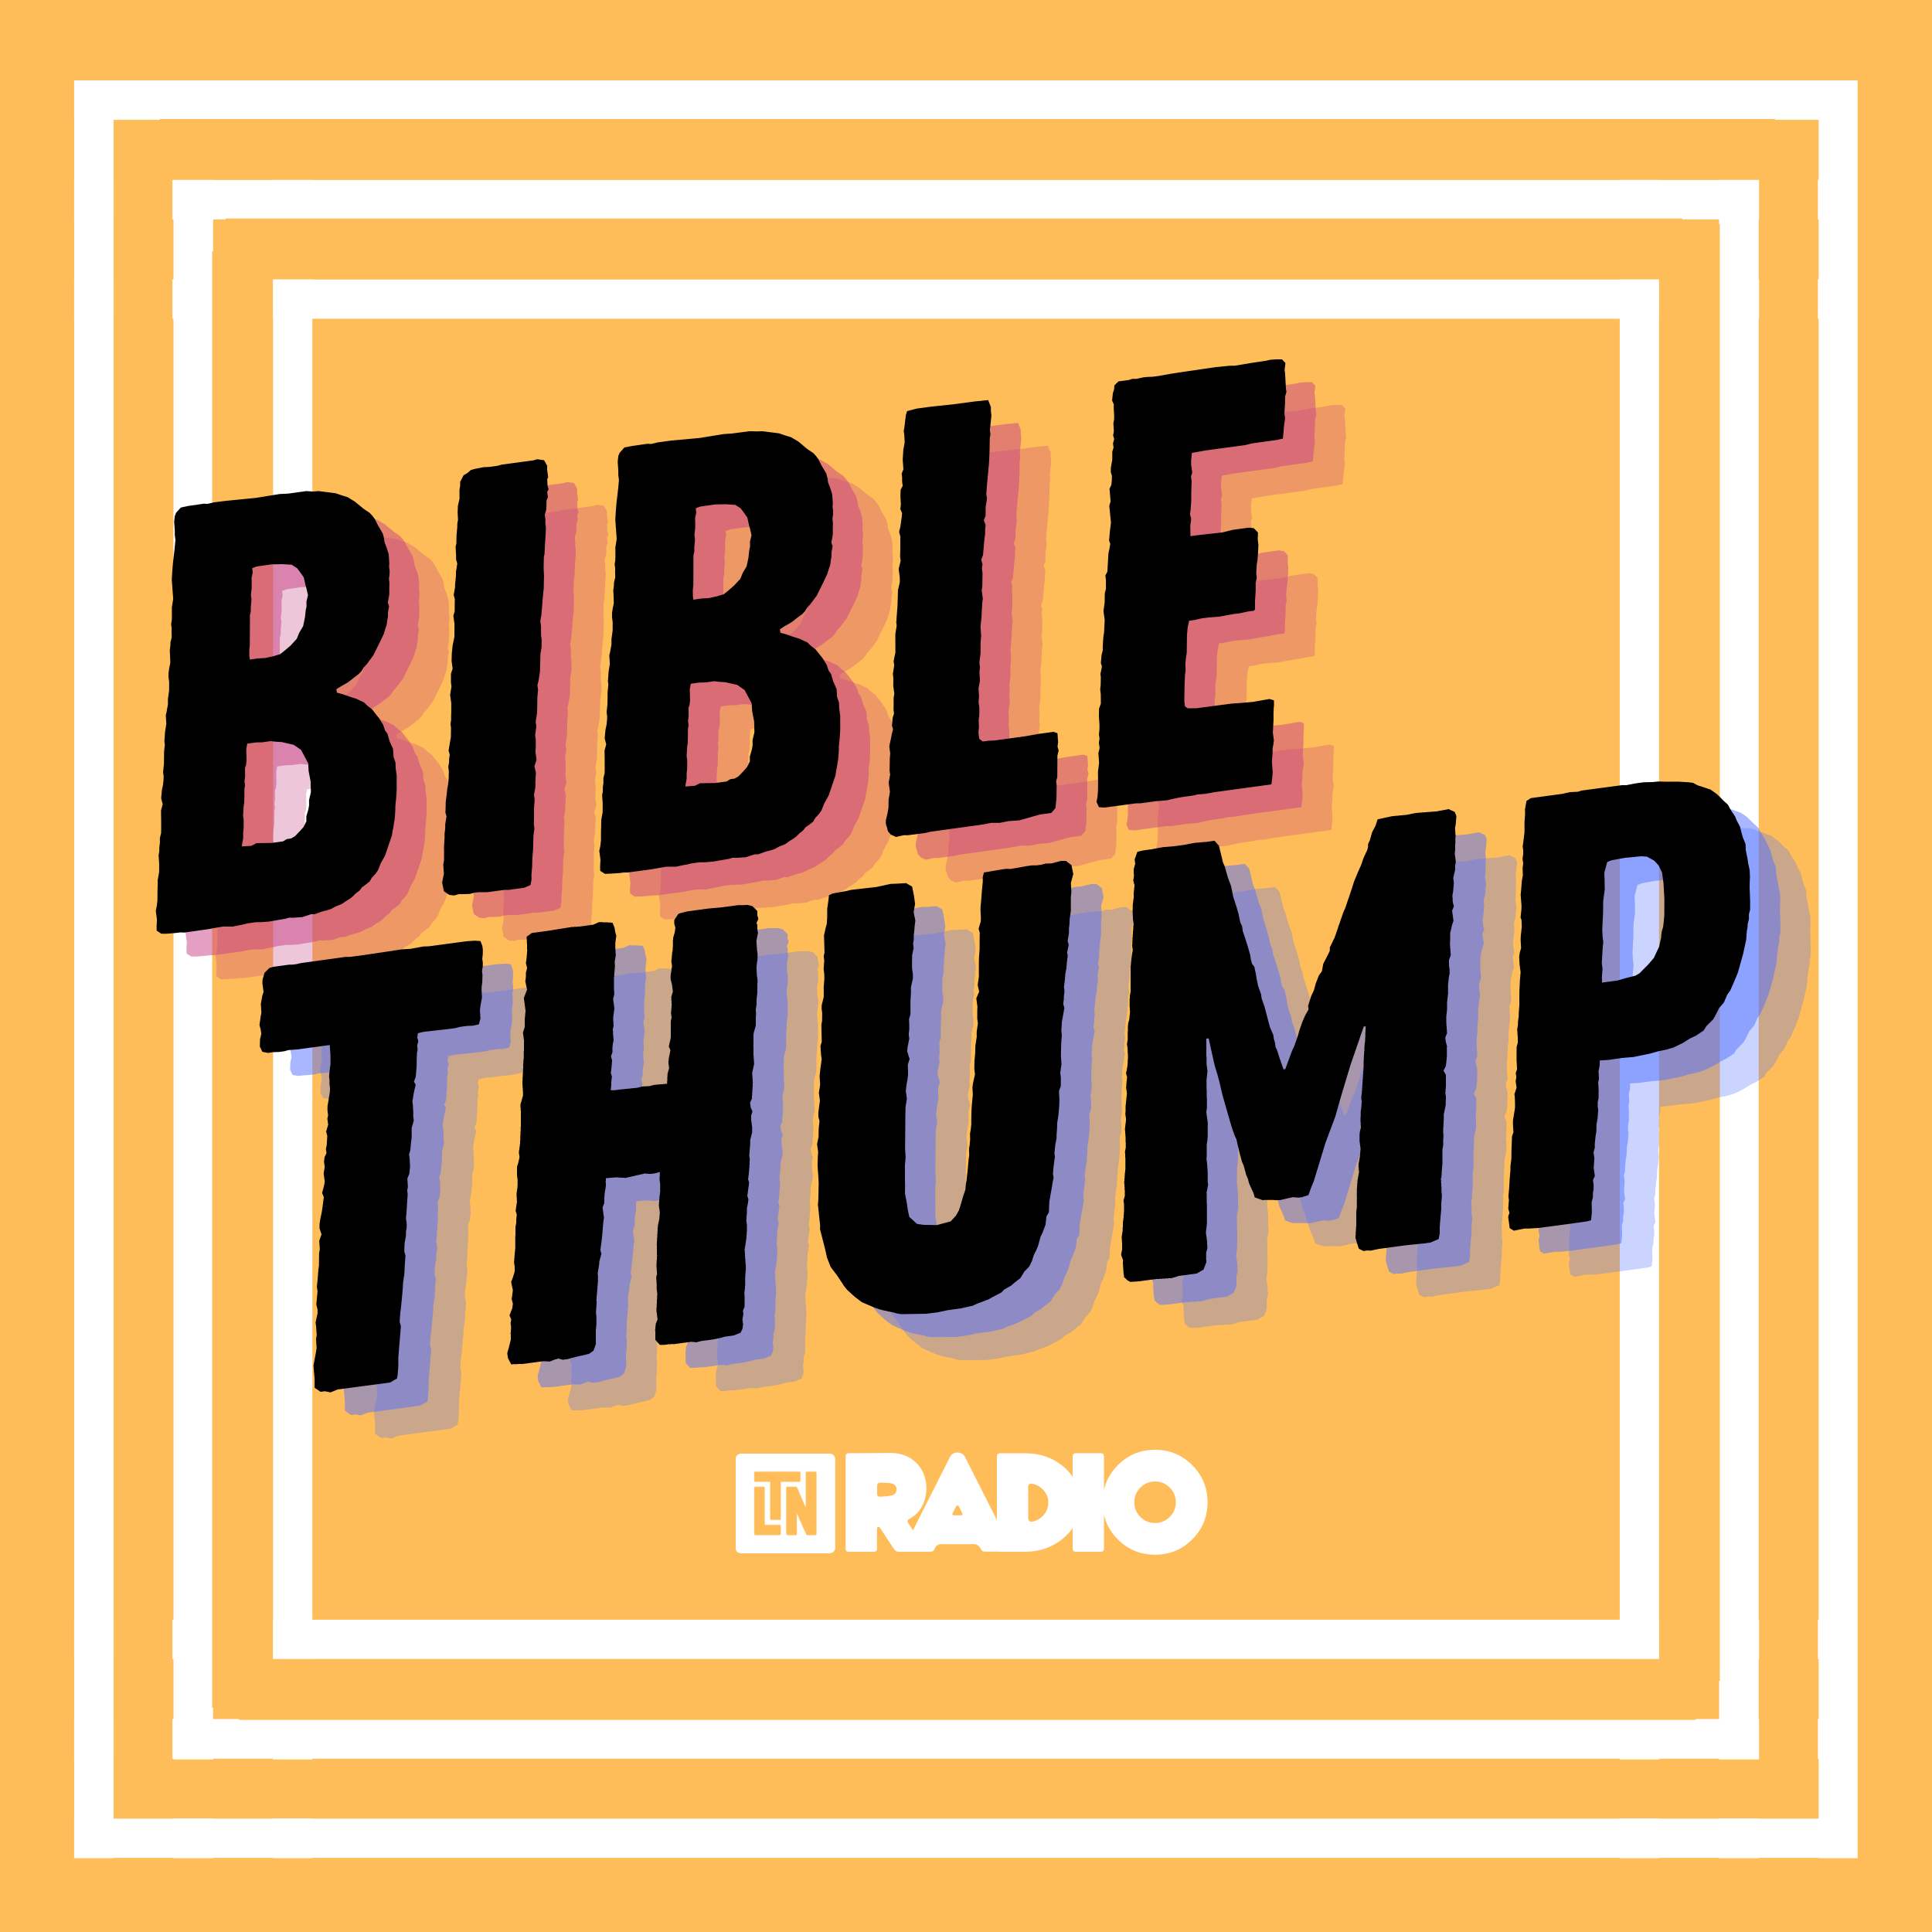 Bible Thump | Speak Light